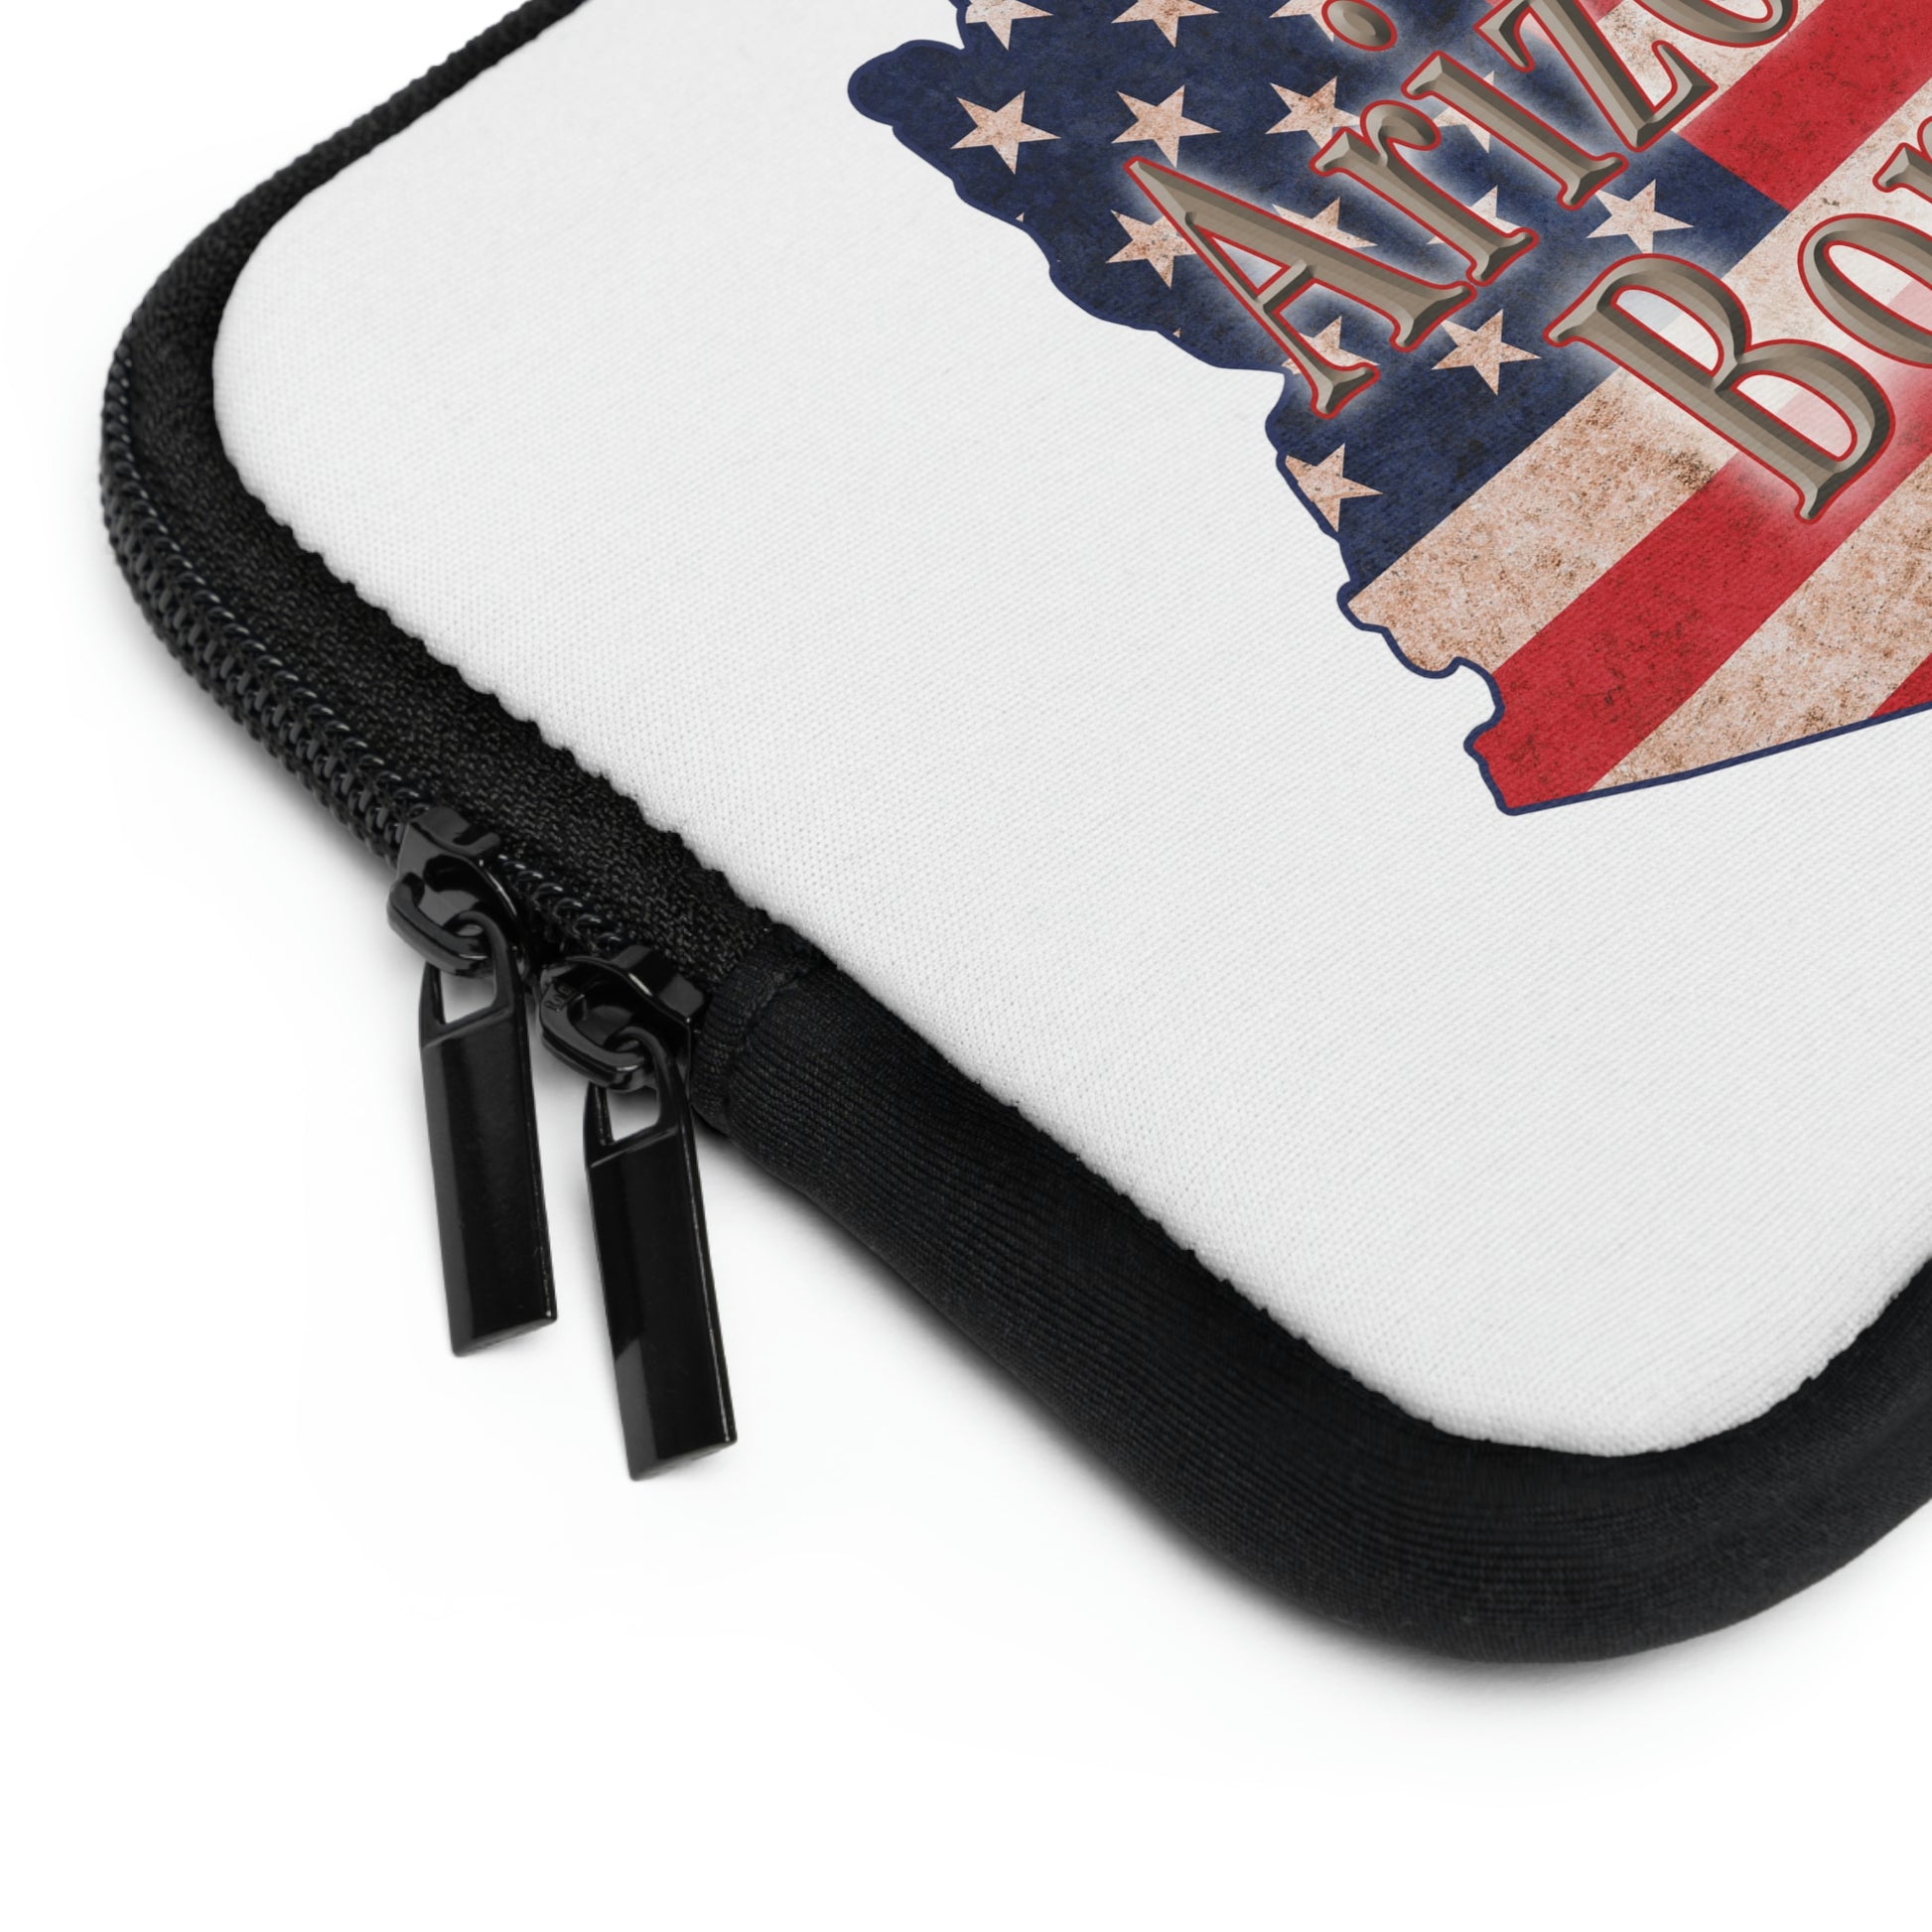 Arizona Born US Flag Print Laptop Sleeve